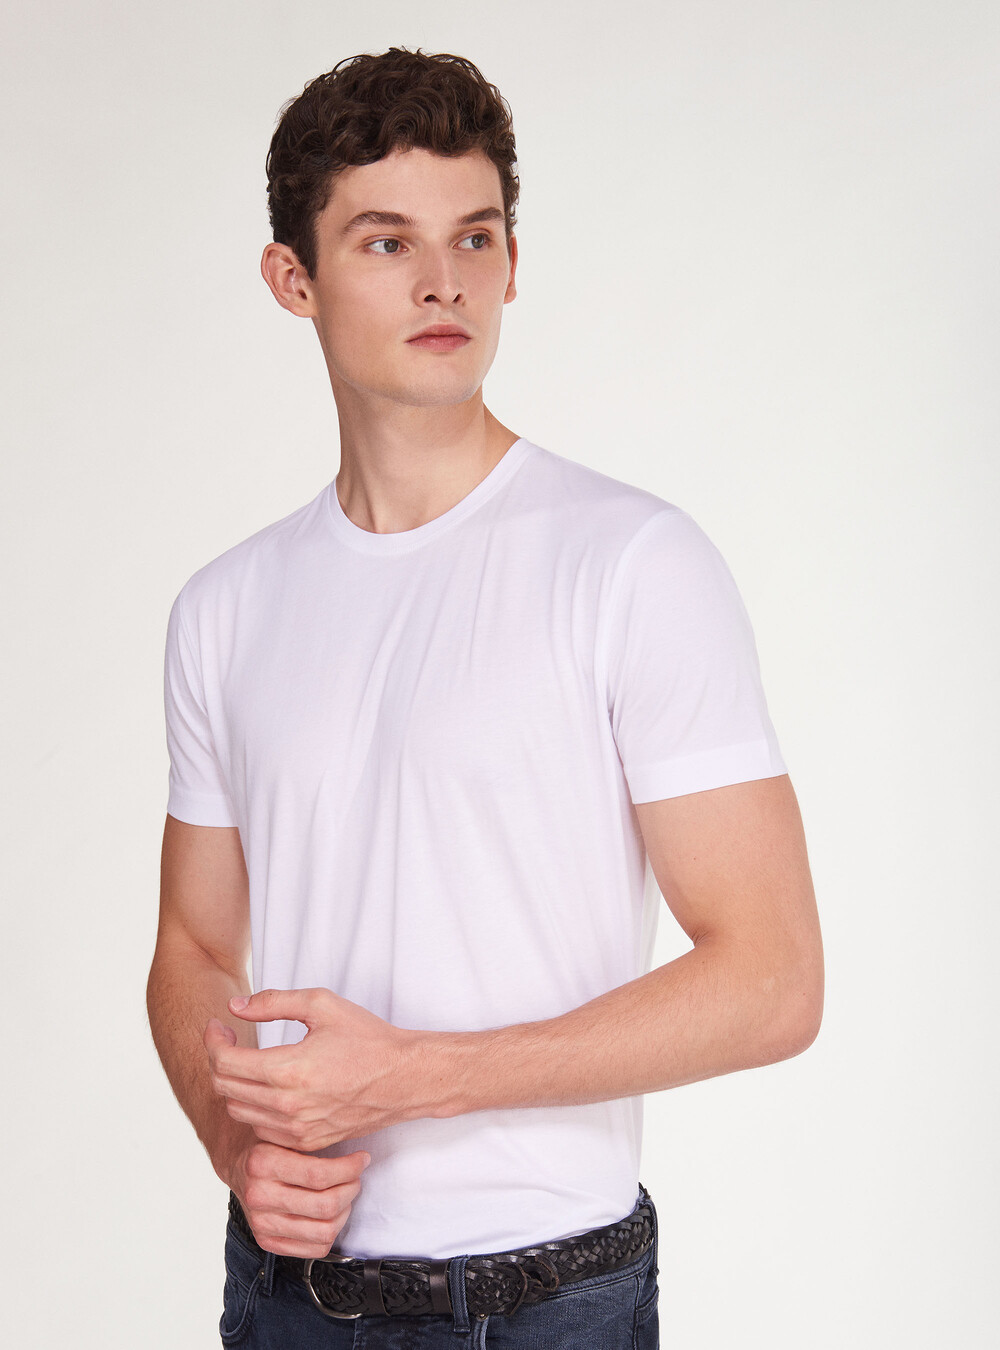 Supima cotton jersey t-shirt | GutteridgeUS | T-shirt Uomo